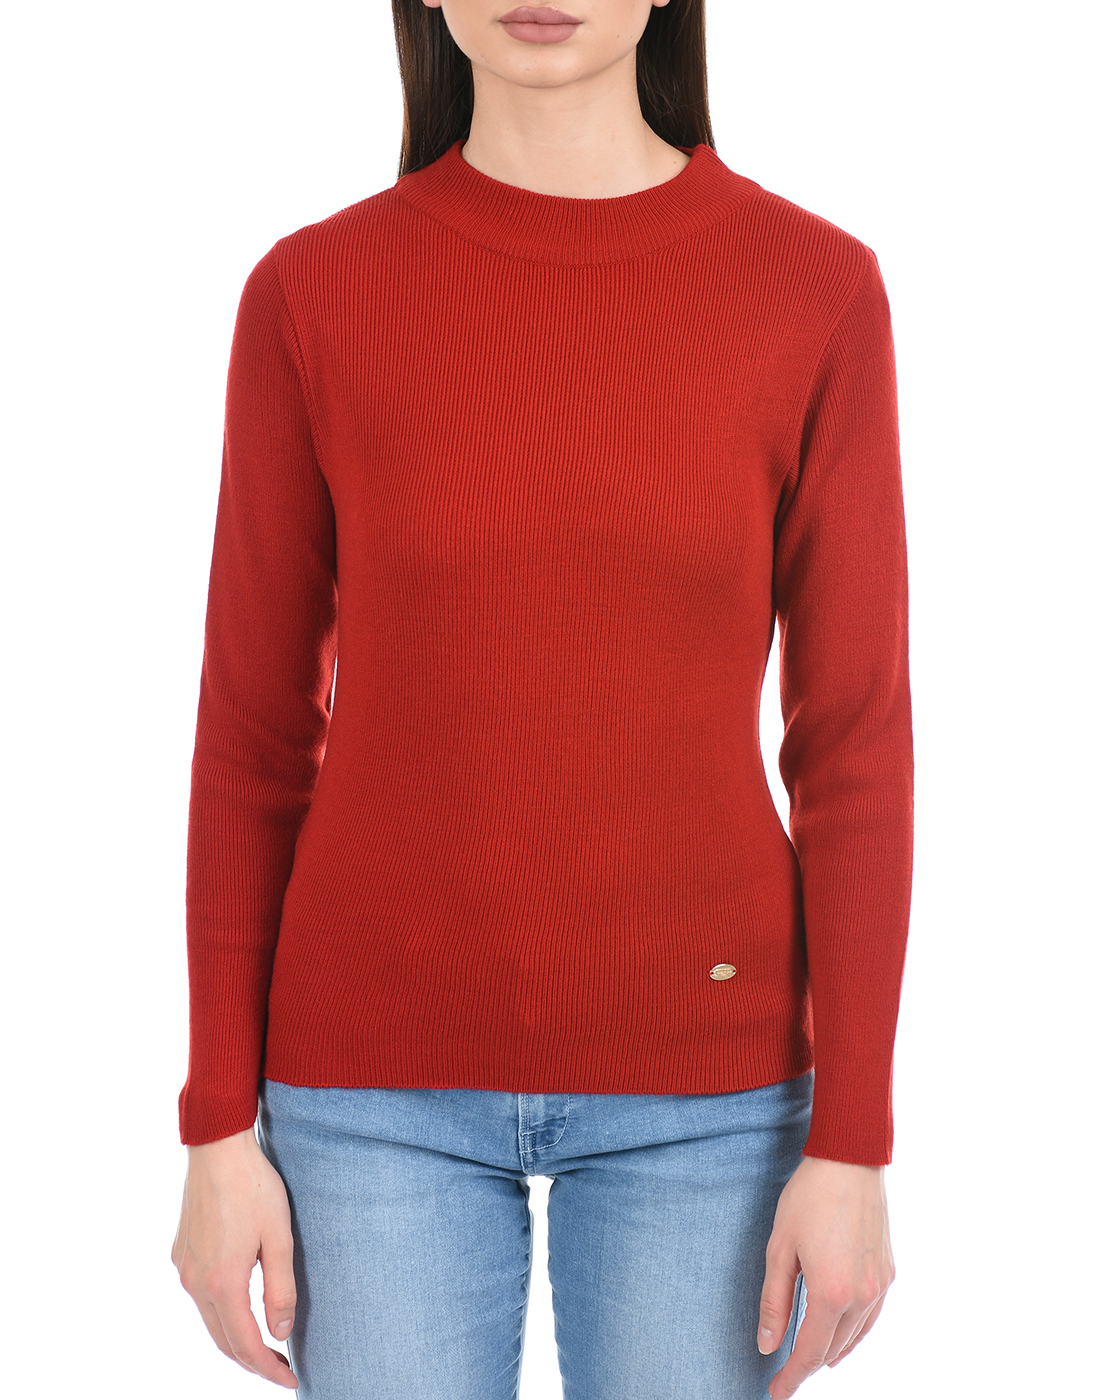 Cloak & Decker by Monte Carlo Women Red Pullover